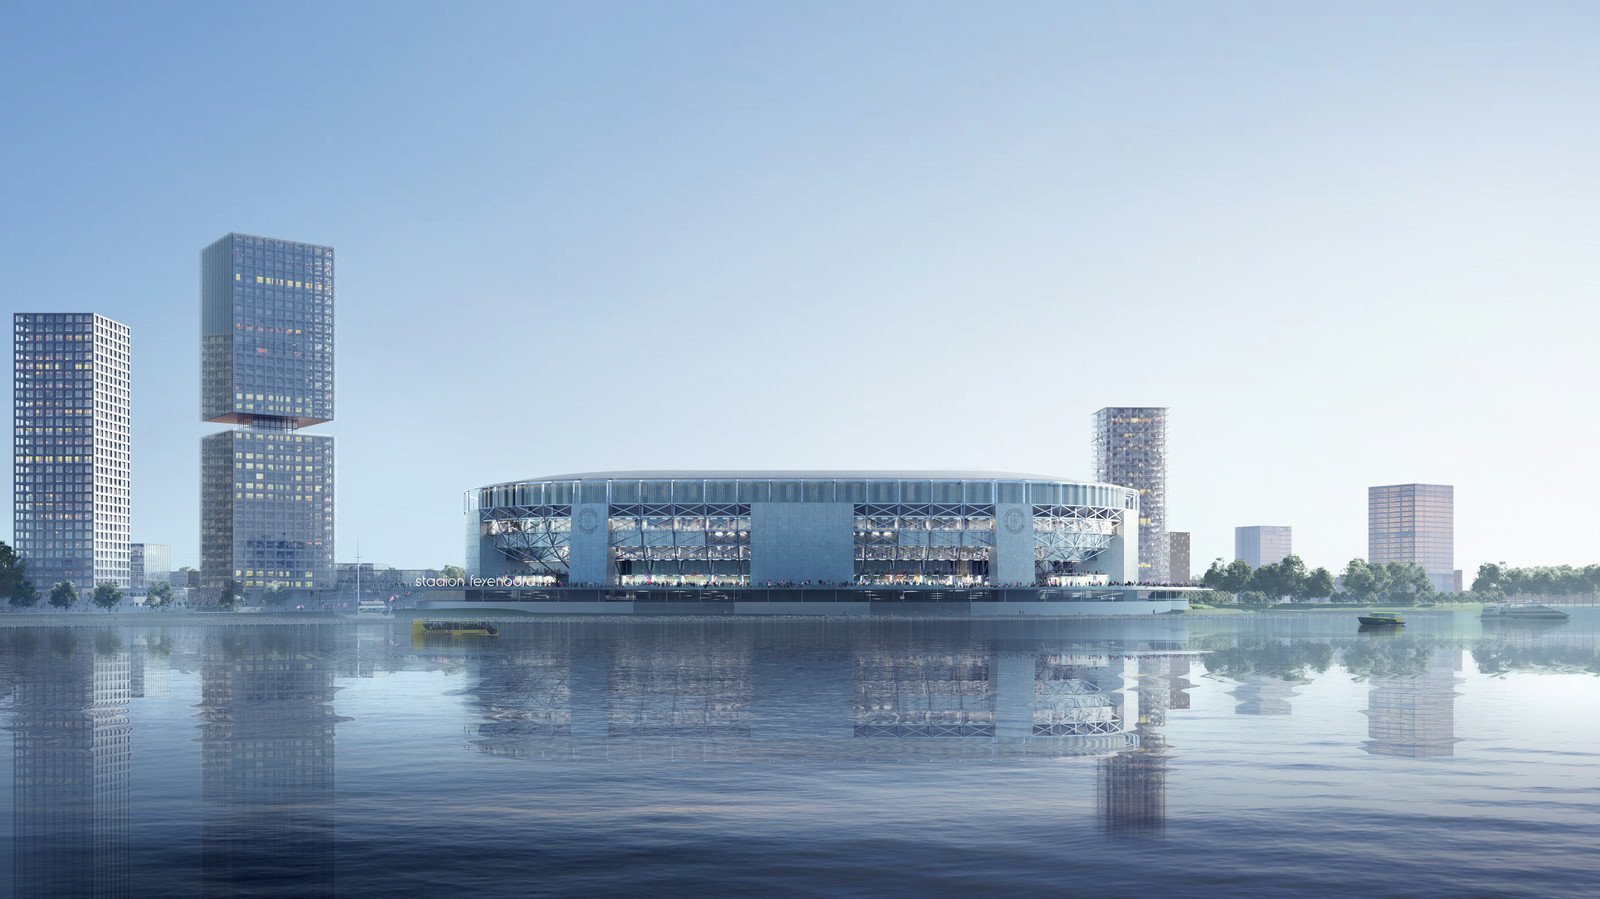 Design: Feyenoord City - StadiumDB.com